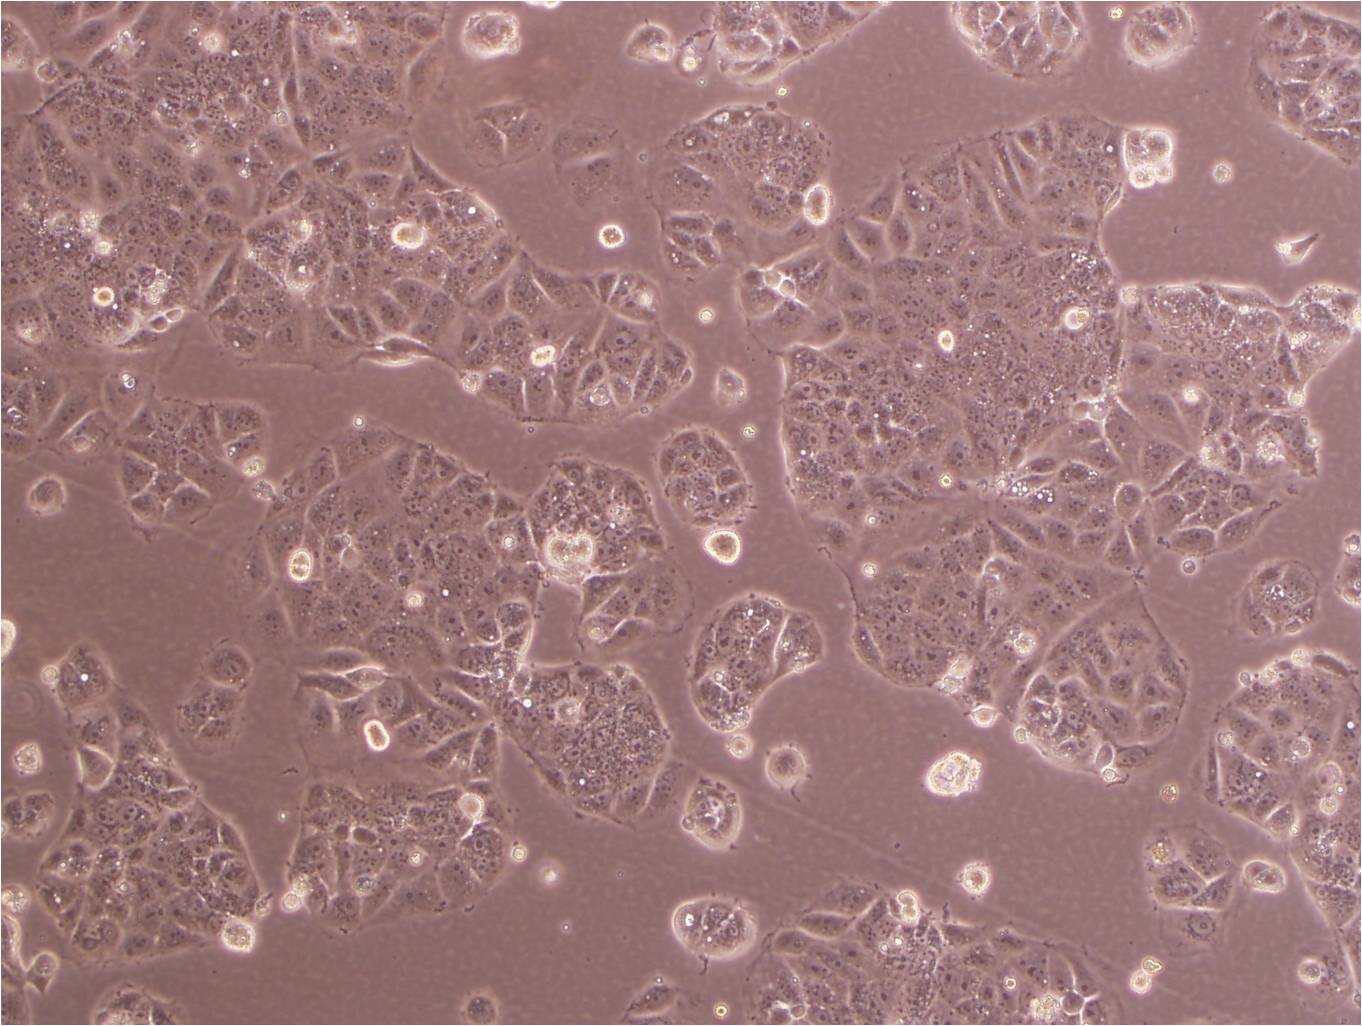 HHL-5 epithelioid cells人胚胎肝细胞系